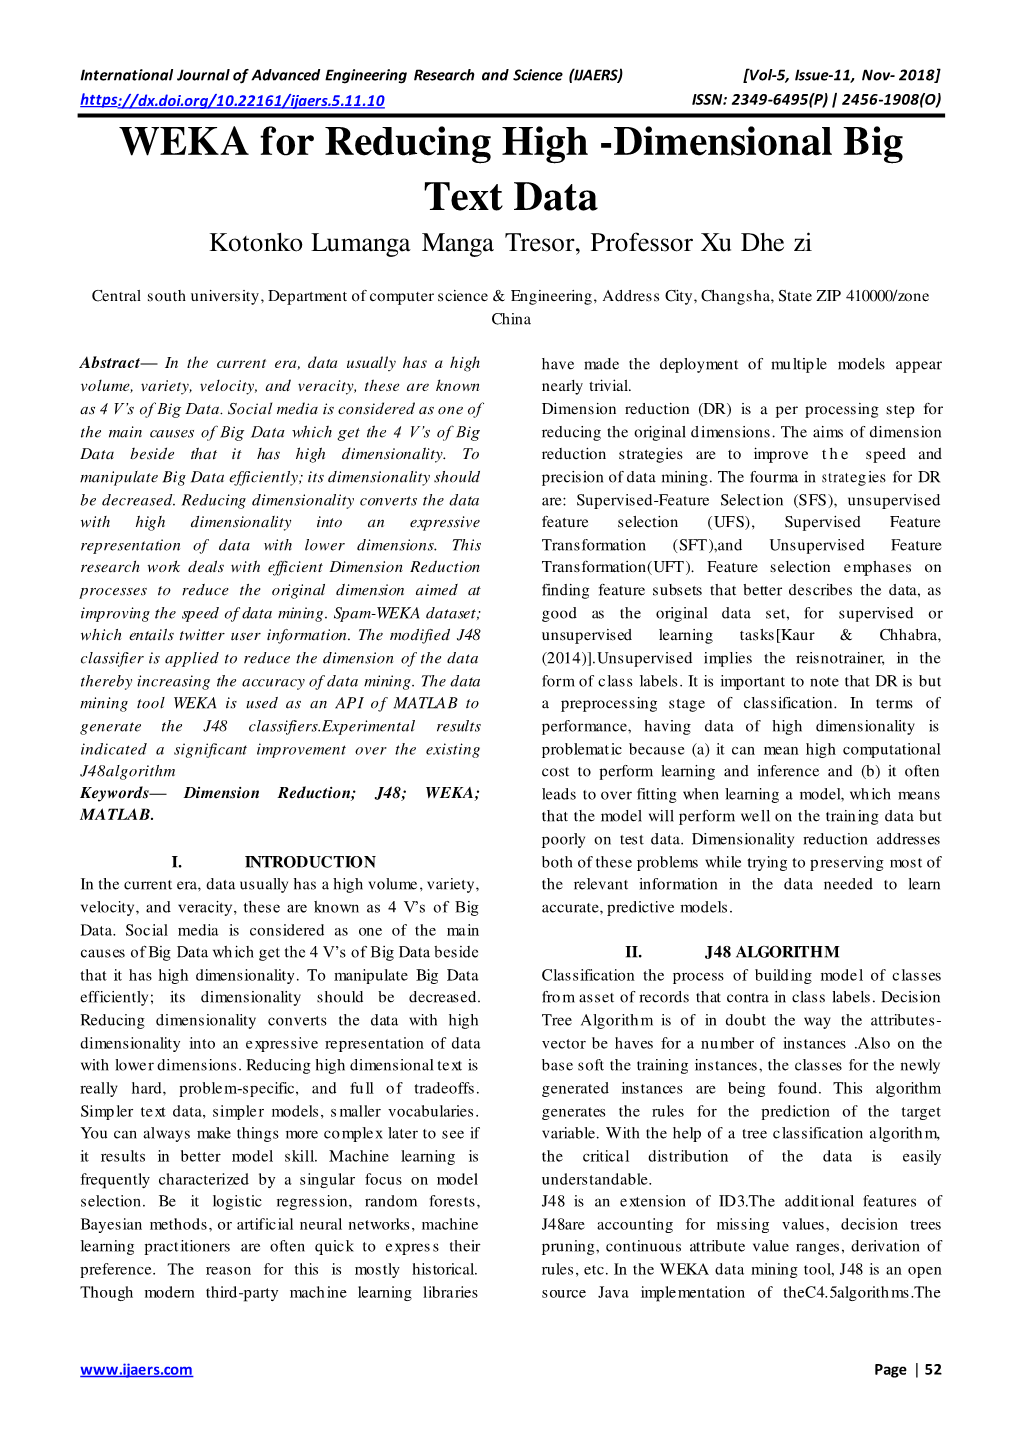 WEKA for Reducing High -Dimensional Big Text Data Kotonko Lumanga Manga Tresor, Professor Xu Dhe Zi